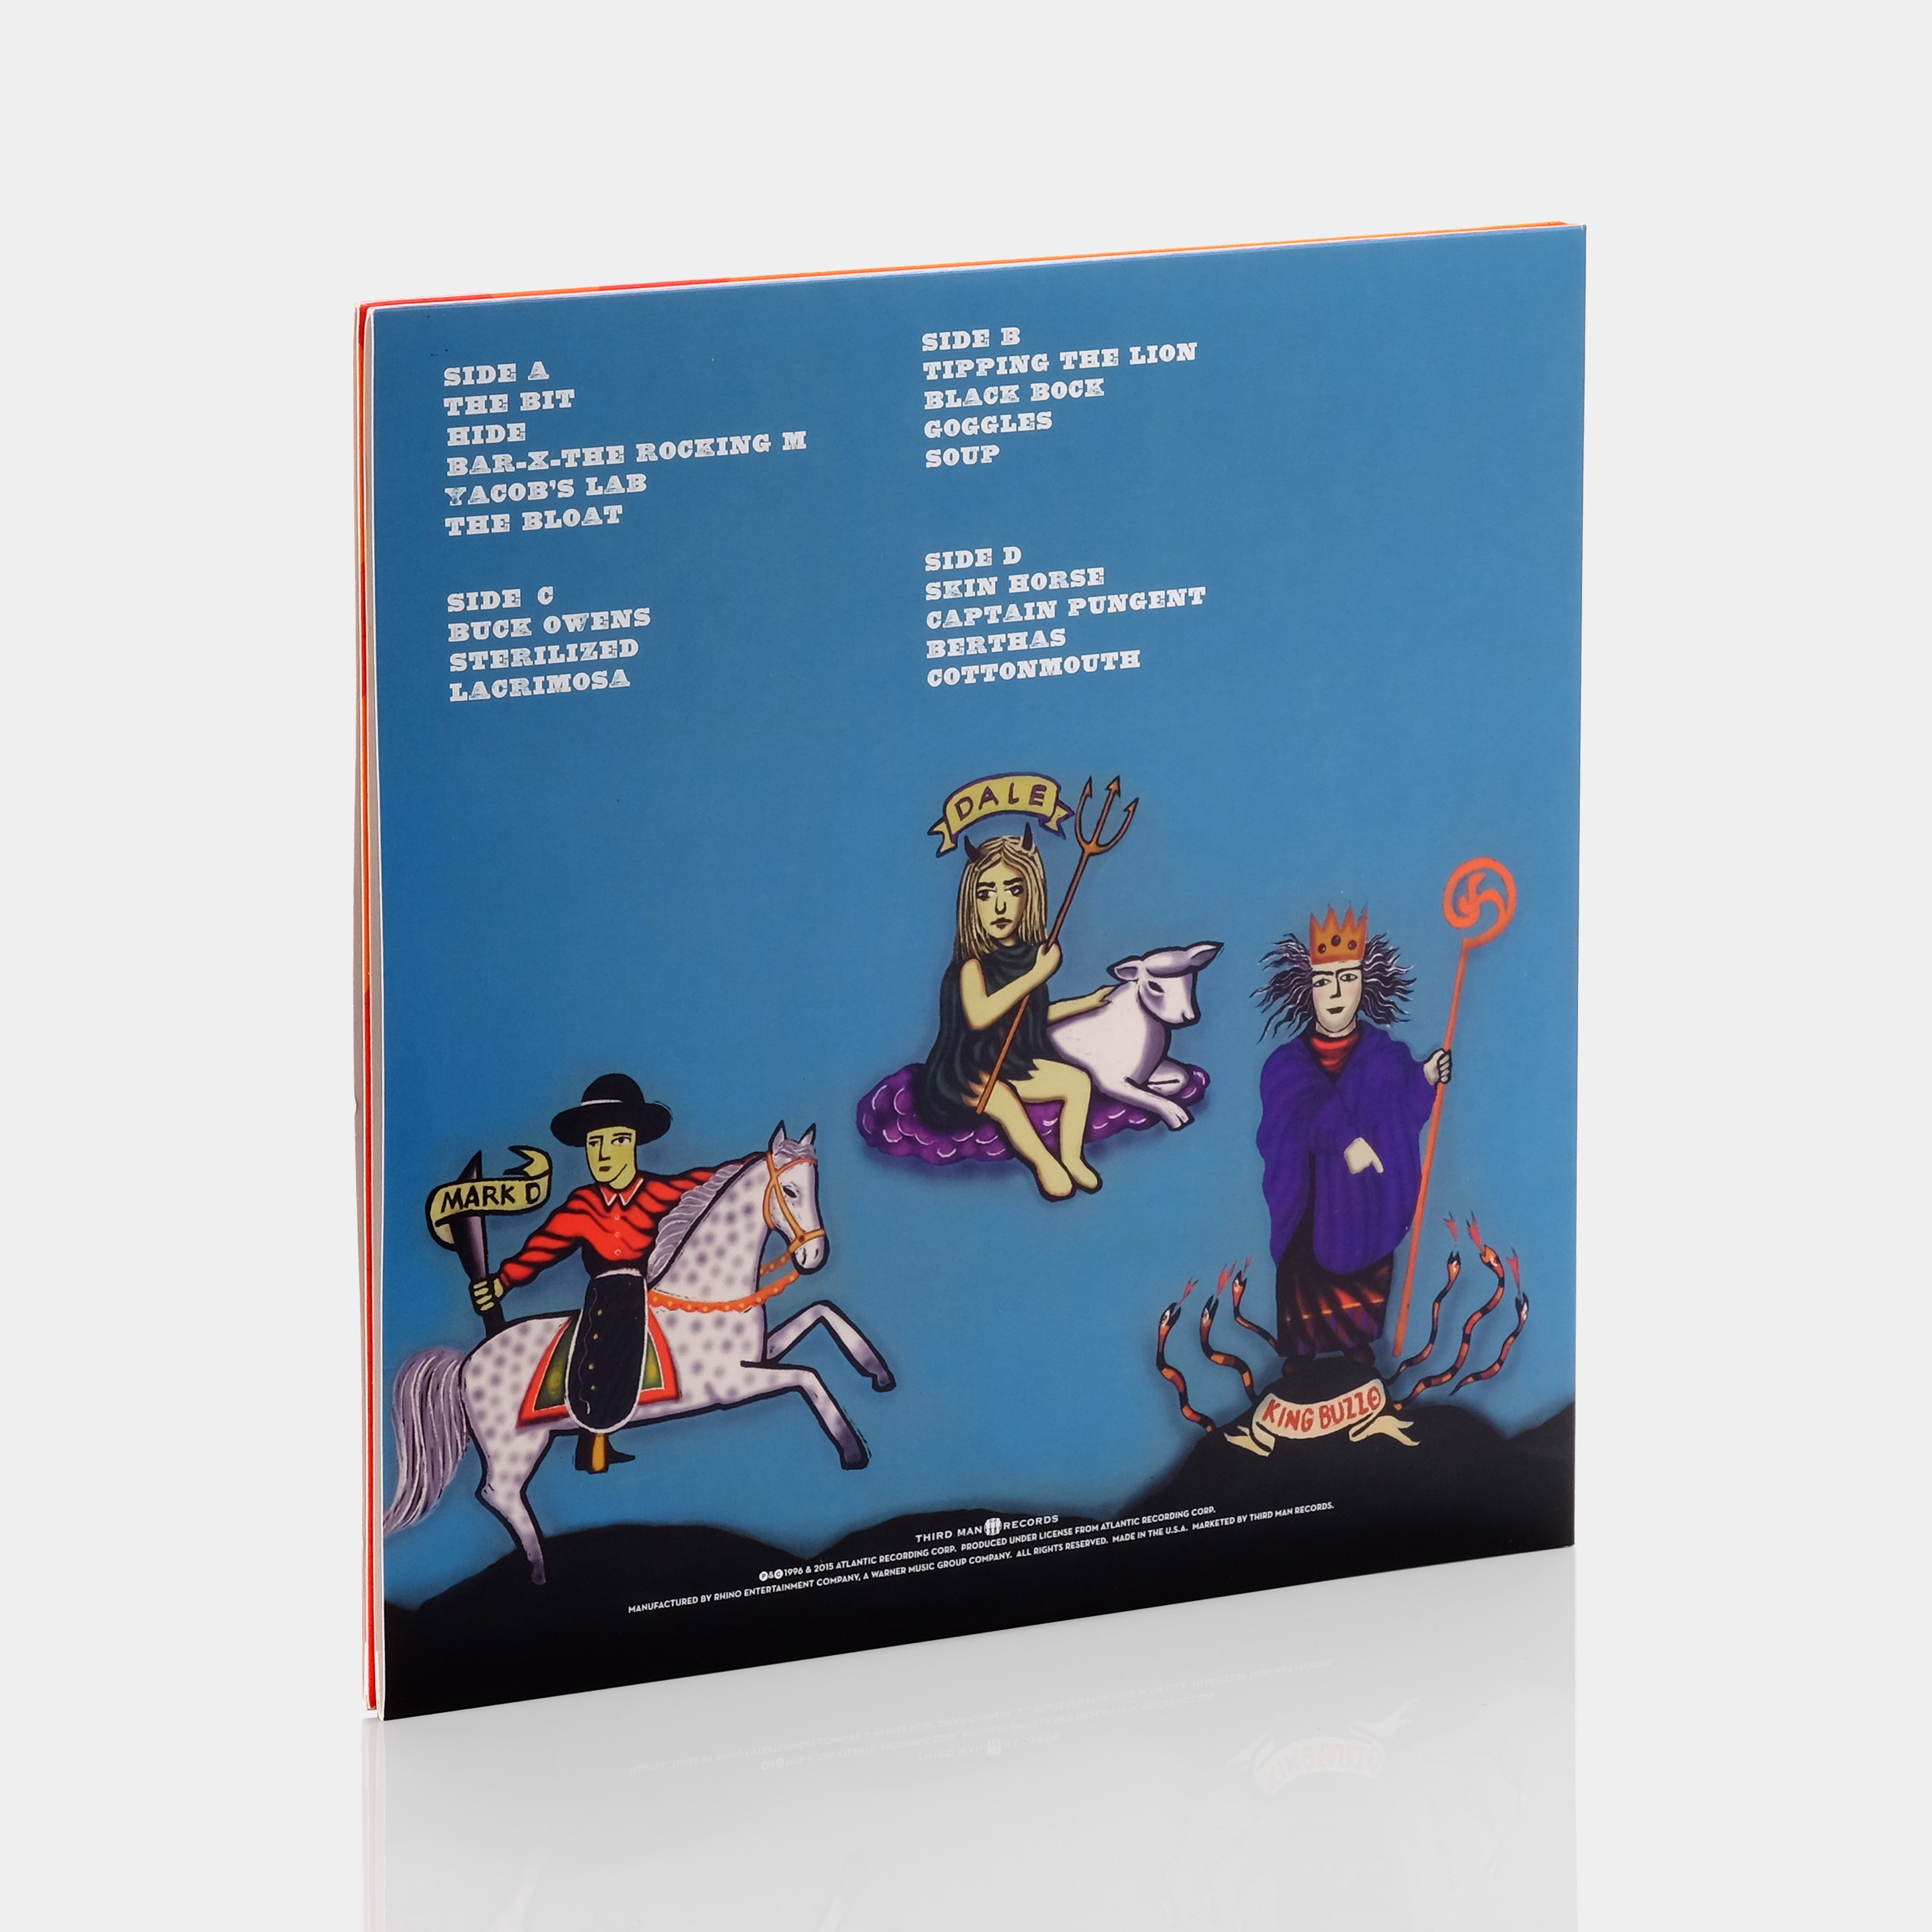 Melvins - Stag 2xLP Vinyl Record